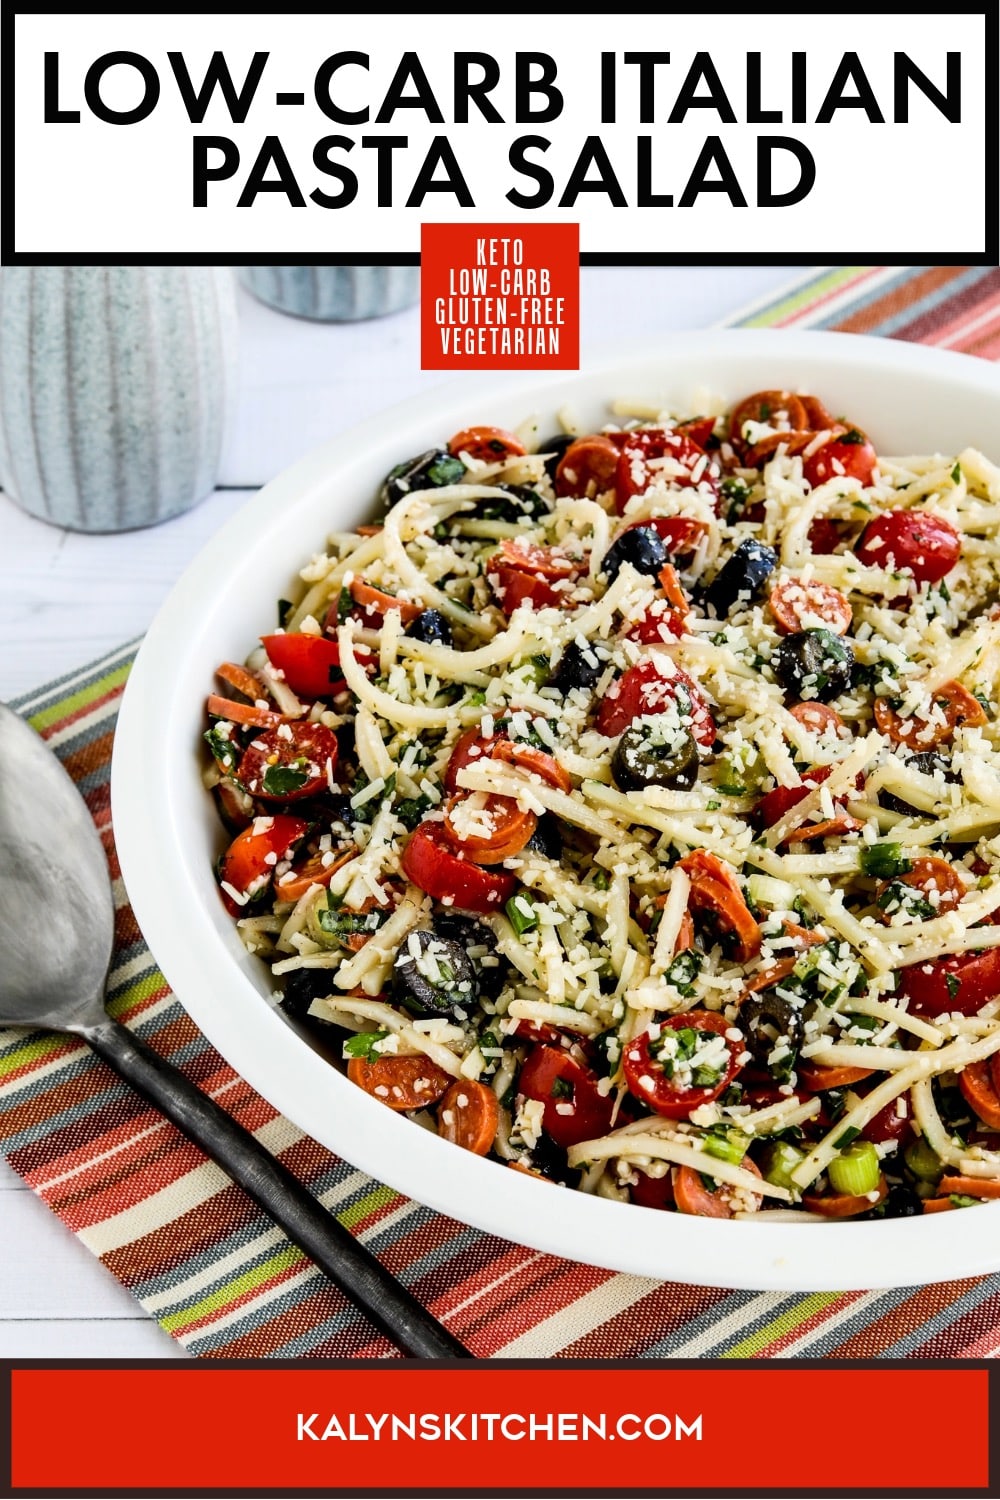 Pinterest image of Low-Carb Italian Pasta Salad